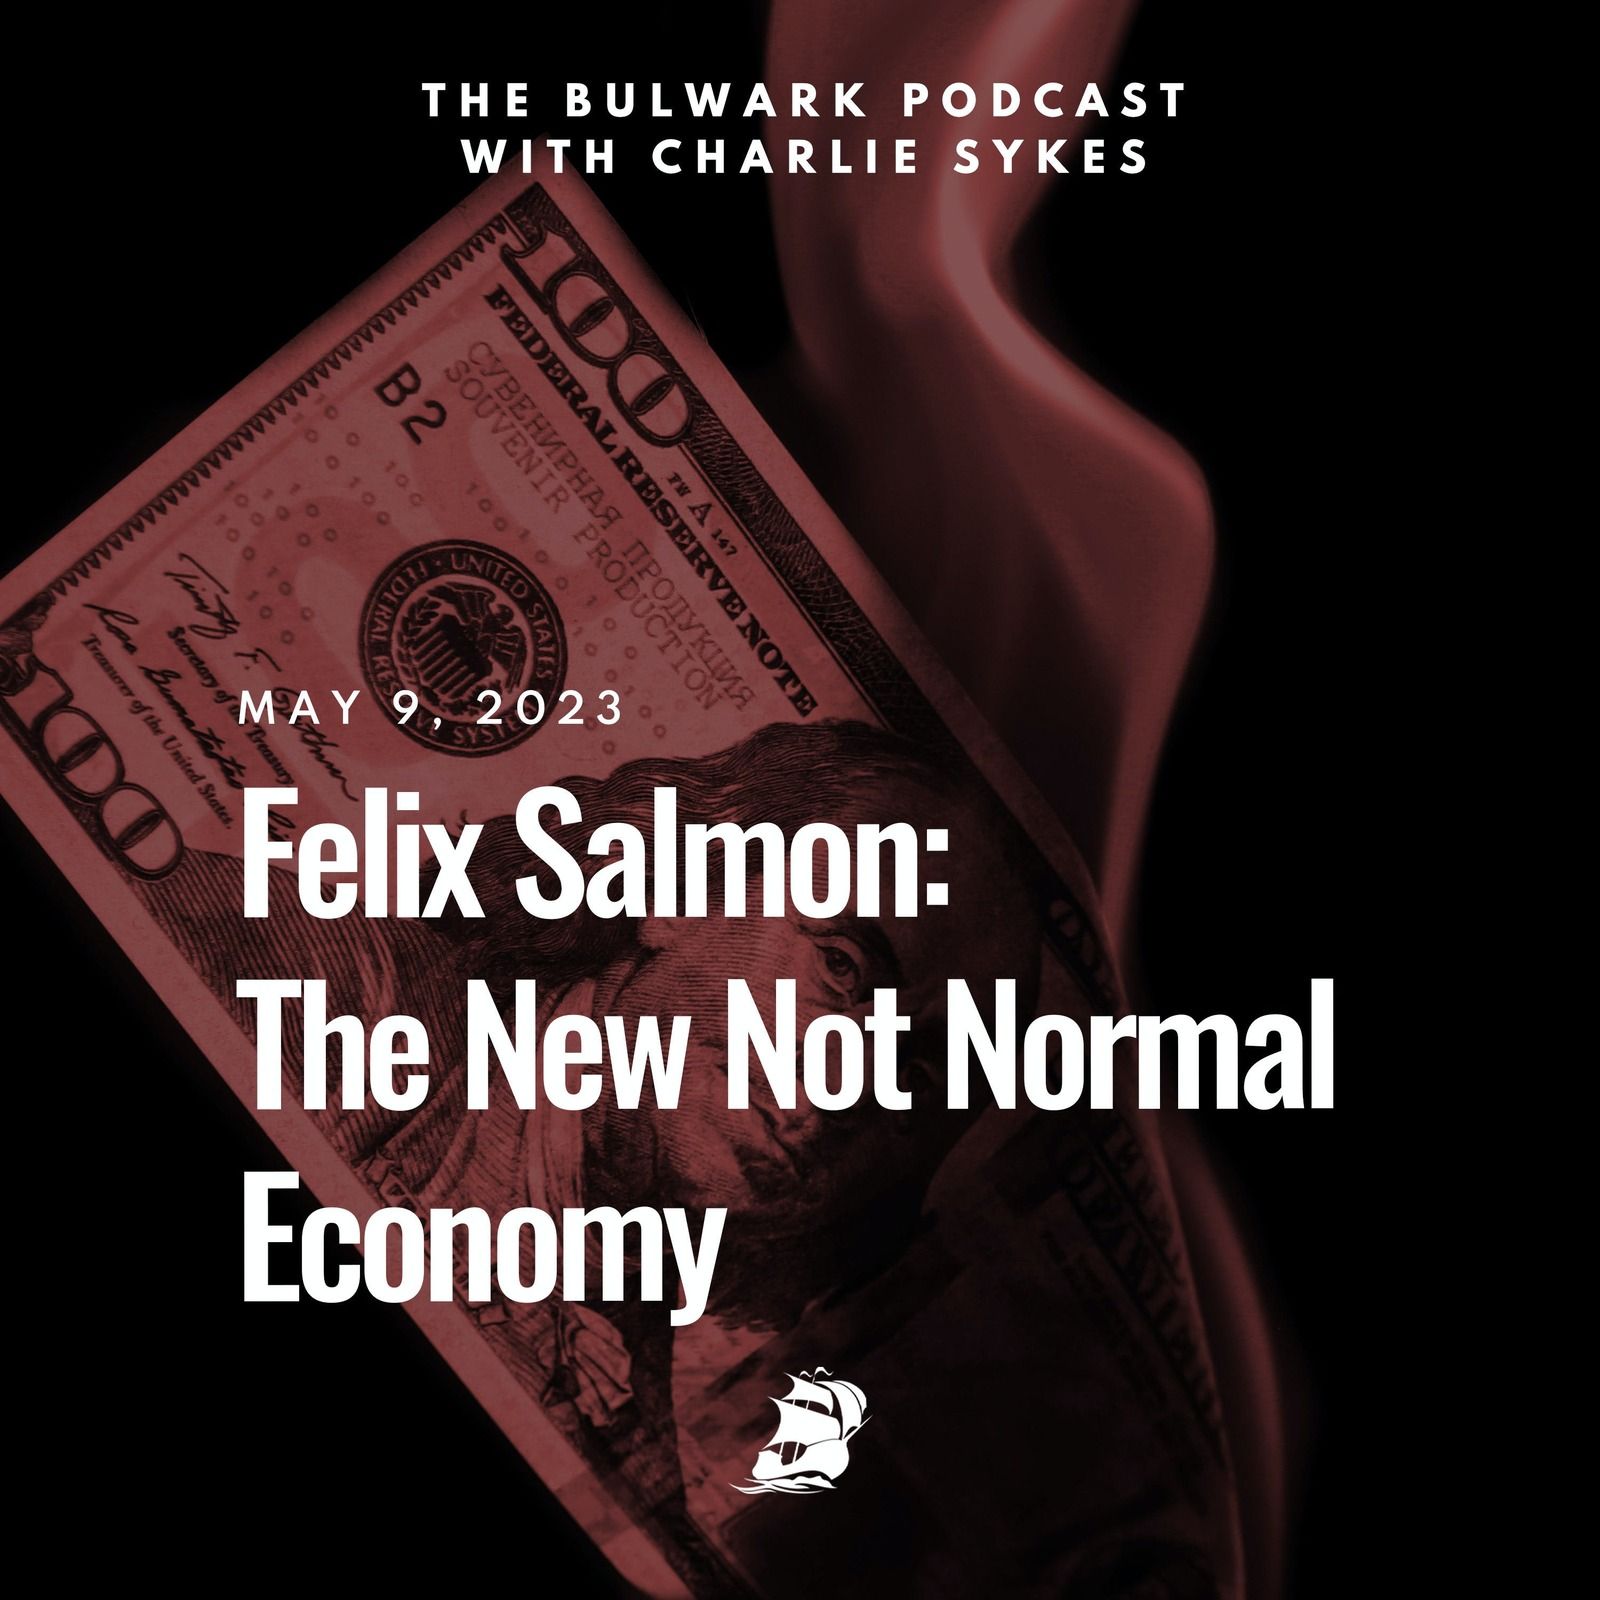 Felix Salmon: The New Not Normal Economy